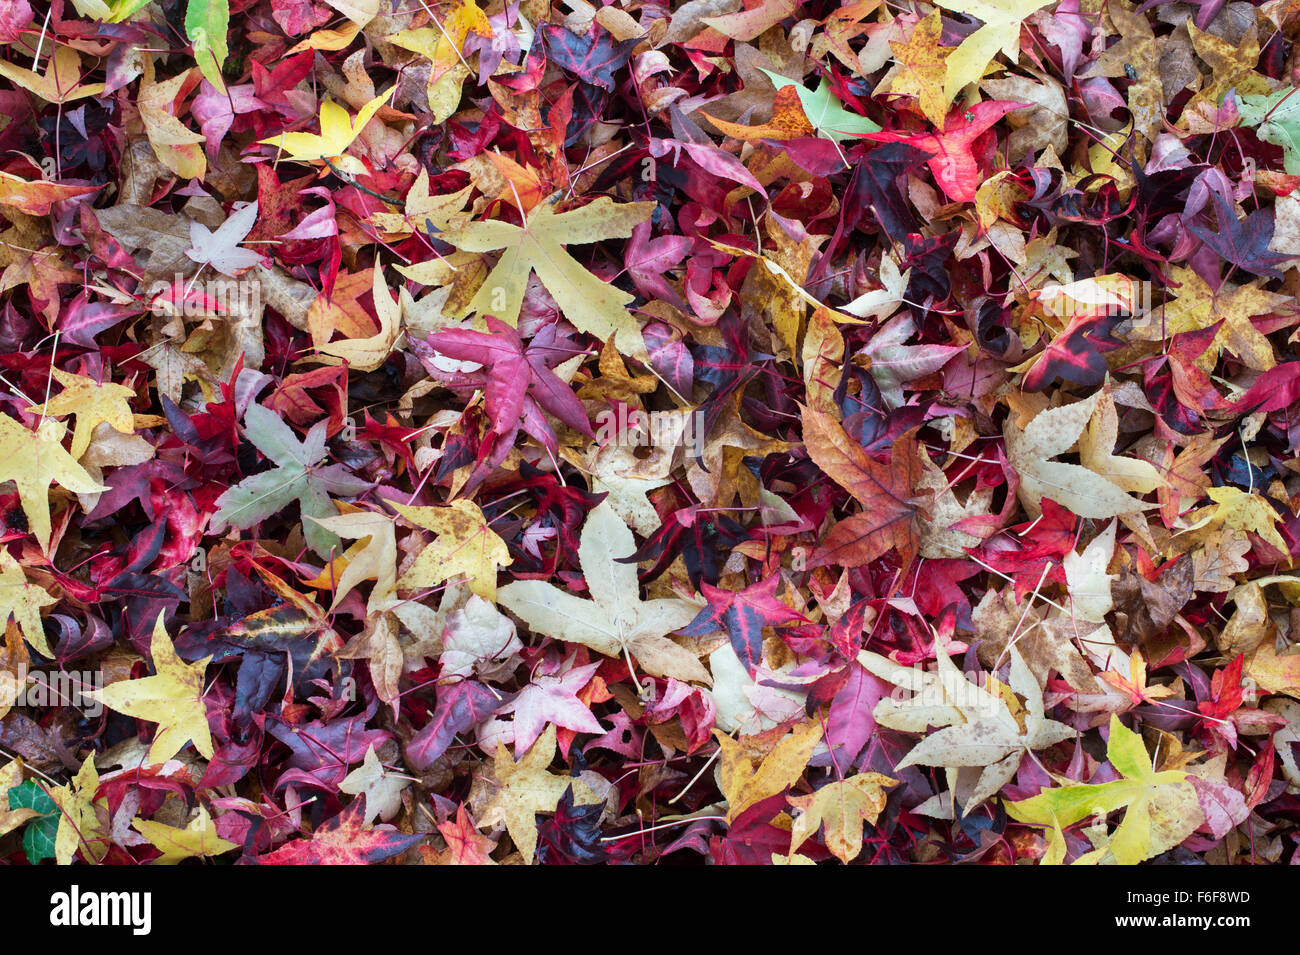 Liquidambar Styraciflua Corky. Sweet Gum tree leaves in autumn on the ground Stock Photo